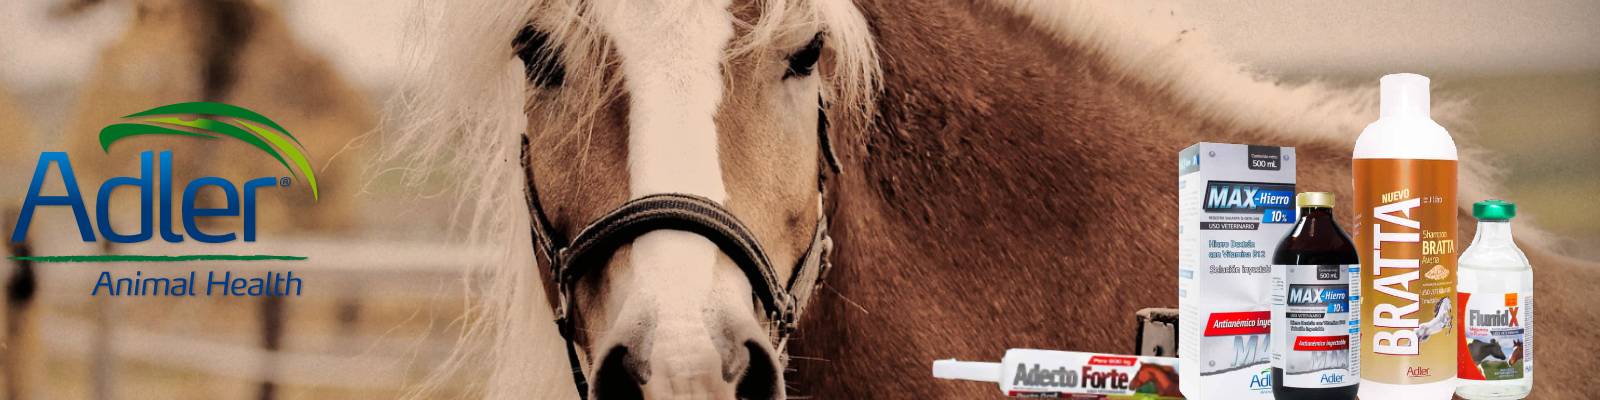 productos adler animal health para caballos